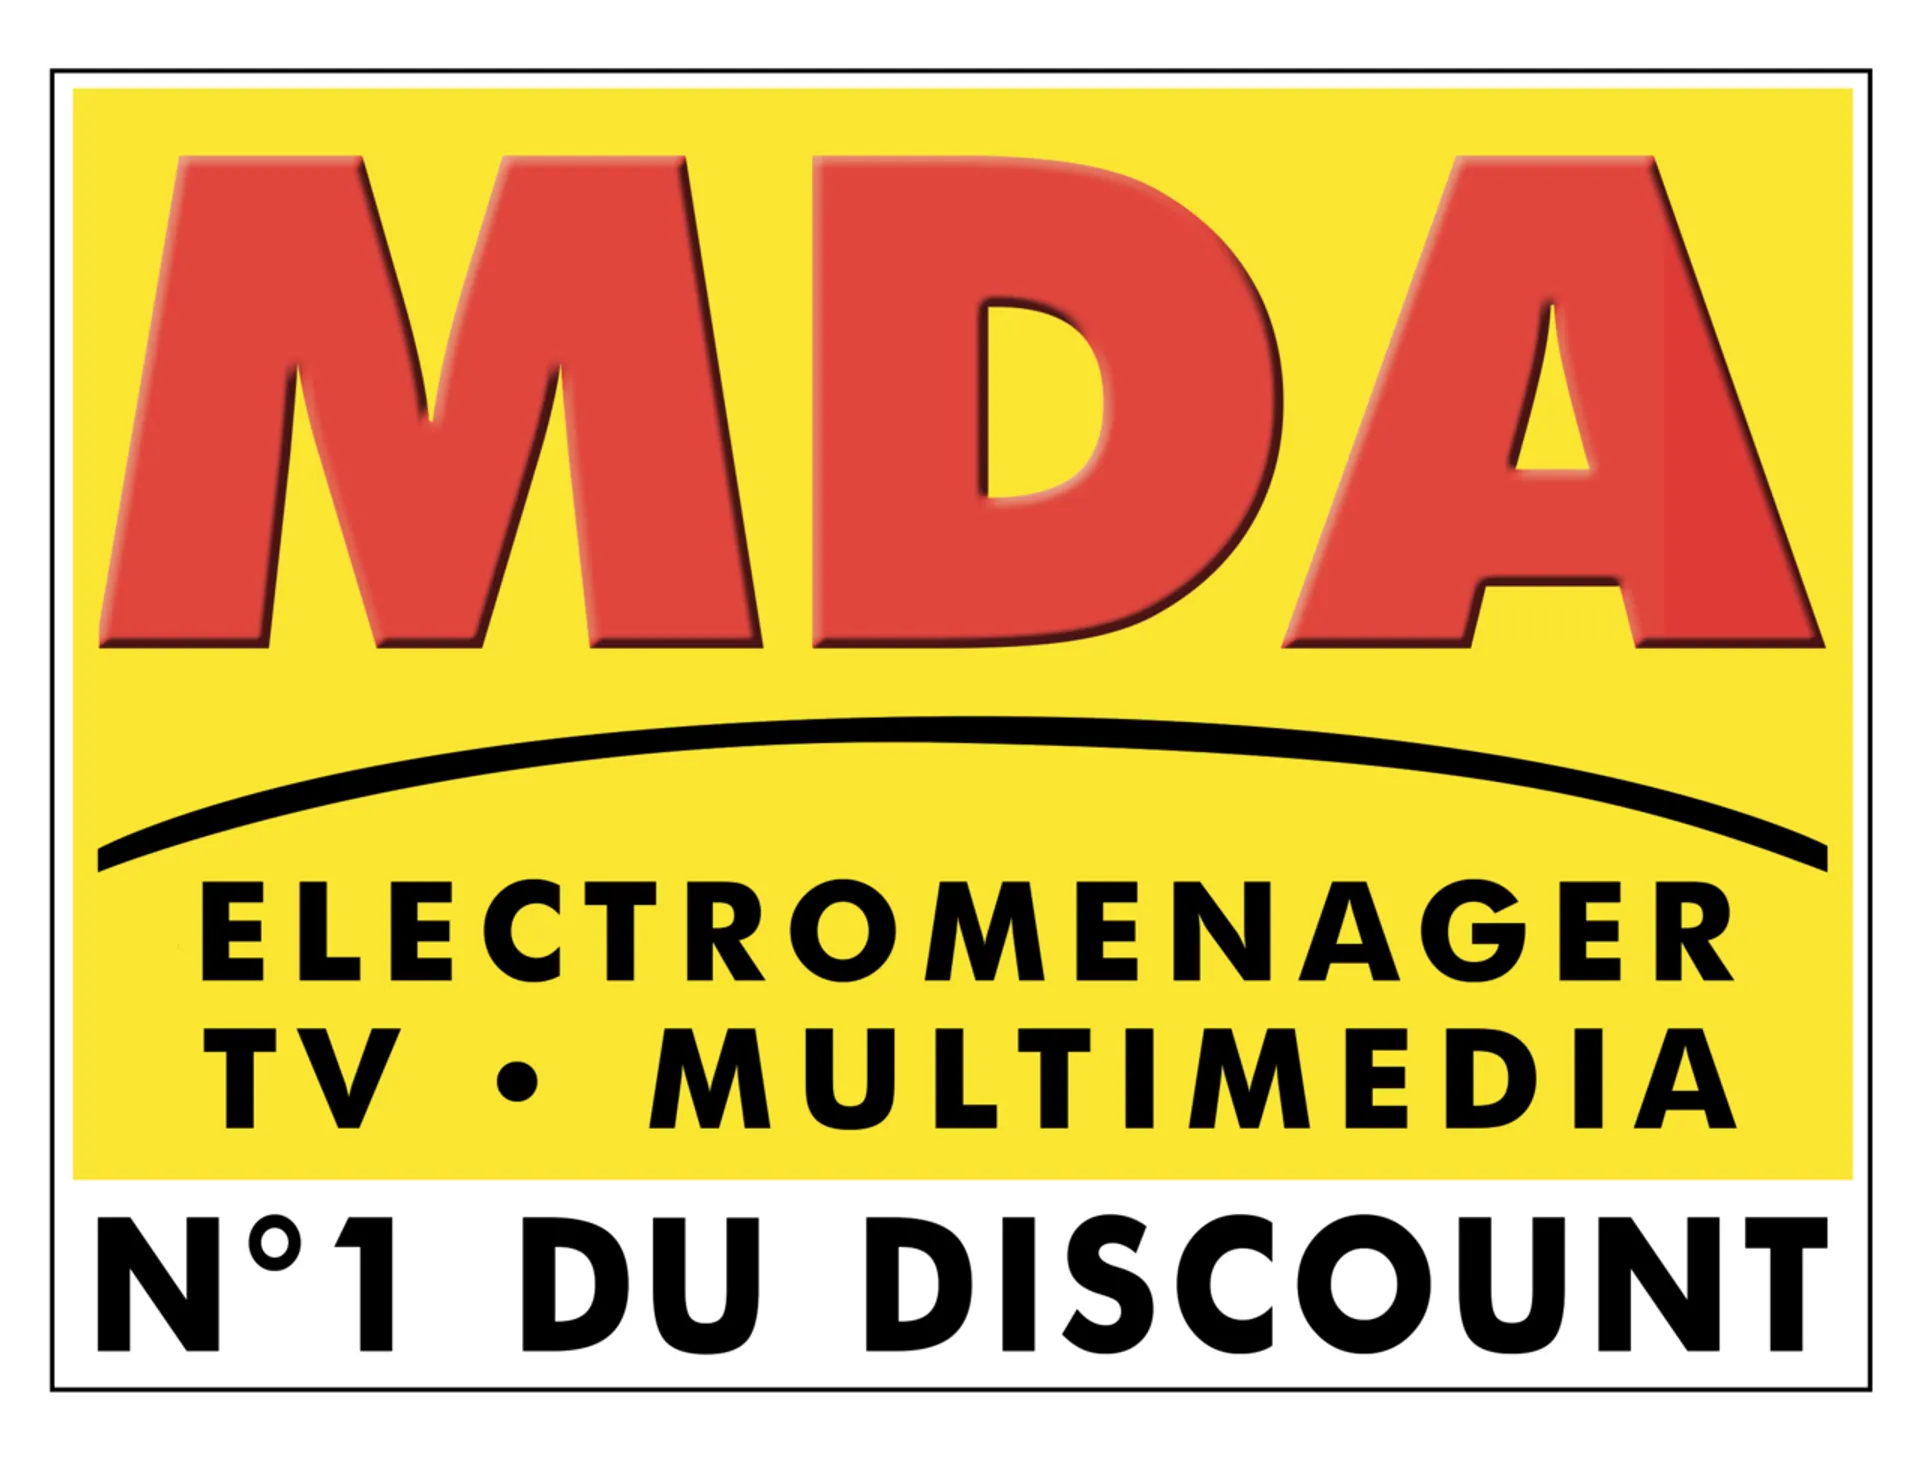 MDA logo